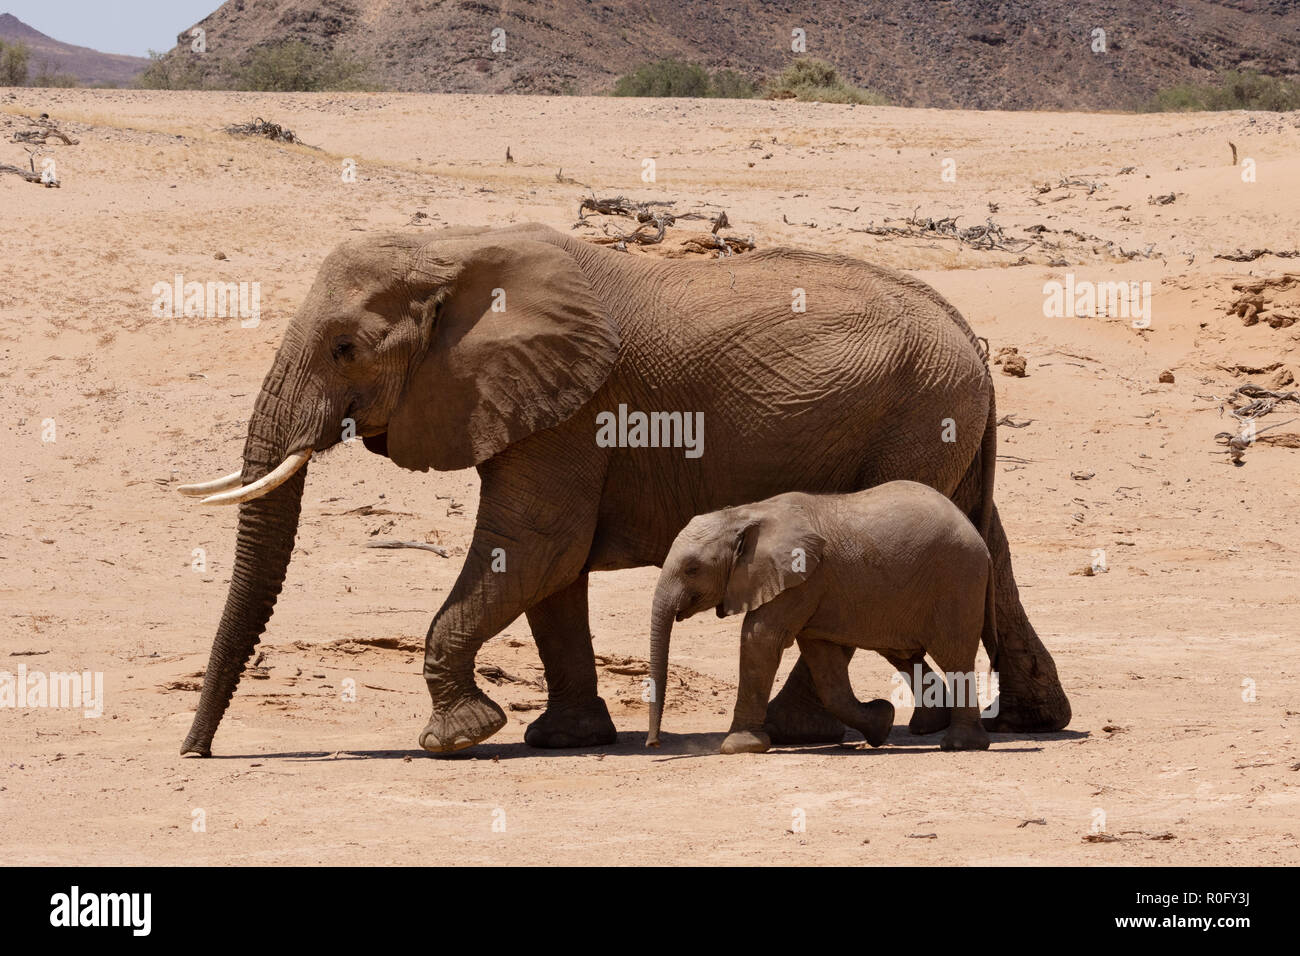 Erwachsener und Kind afrikanische Elefanten (Loxodonta Africana), aka Wüstenelefanten wandern in den Haub River Bed, Damaraland, Namibia Afrika Stockfoto